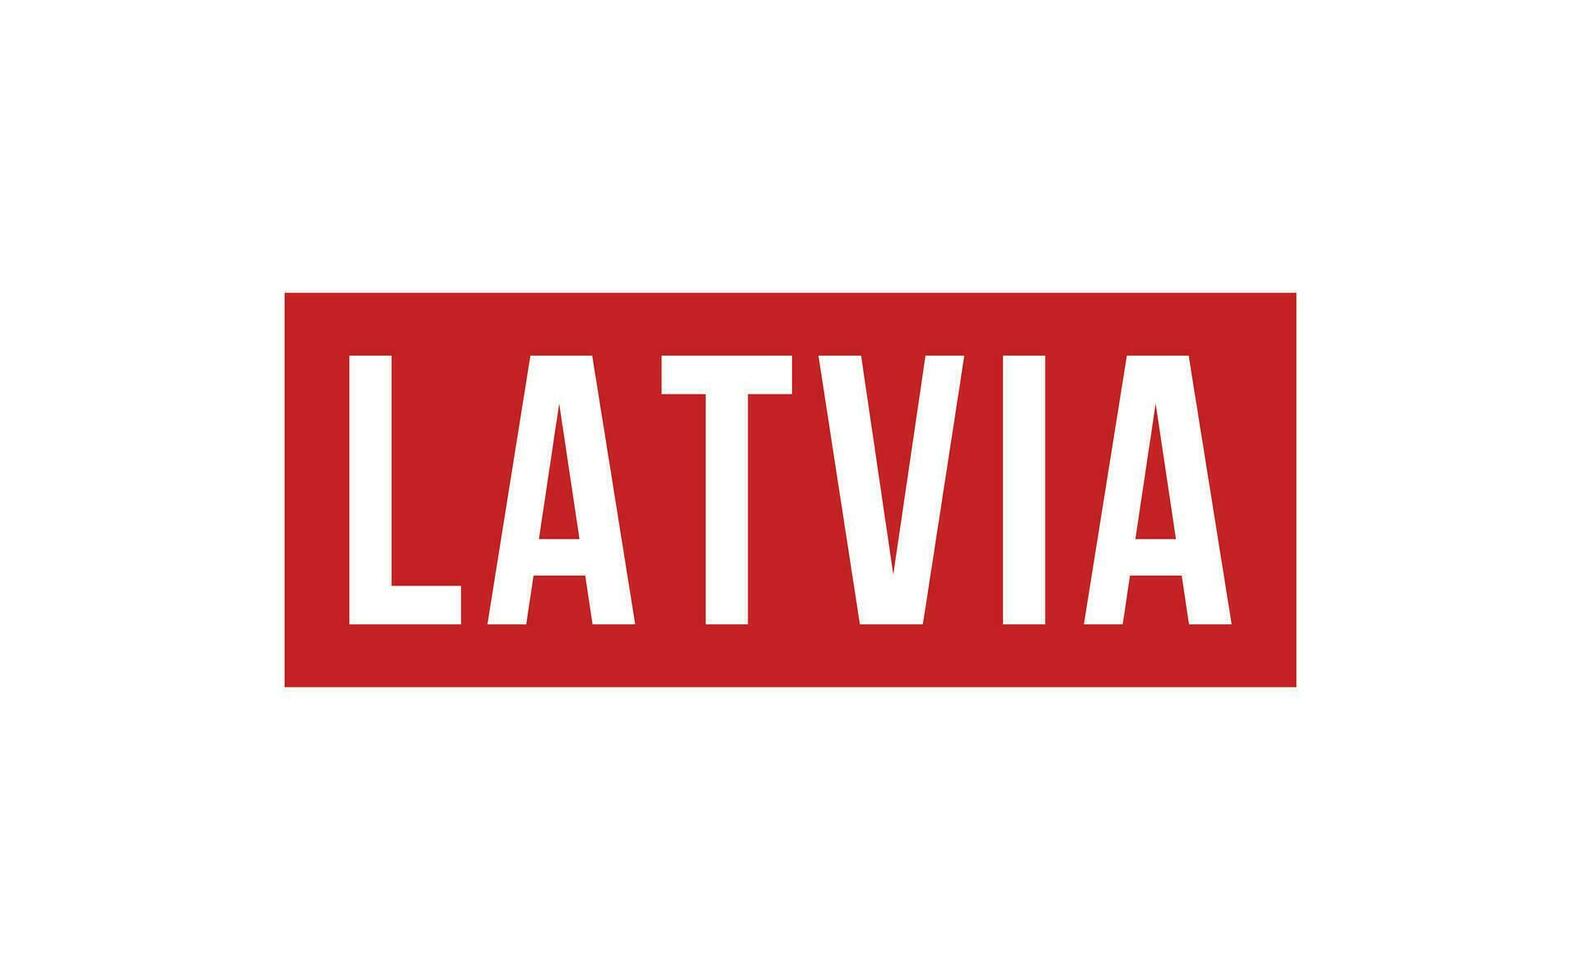 Lettland Gummi Briefmarke Siegel Vektor